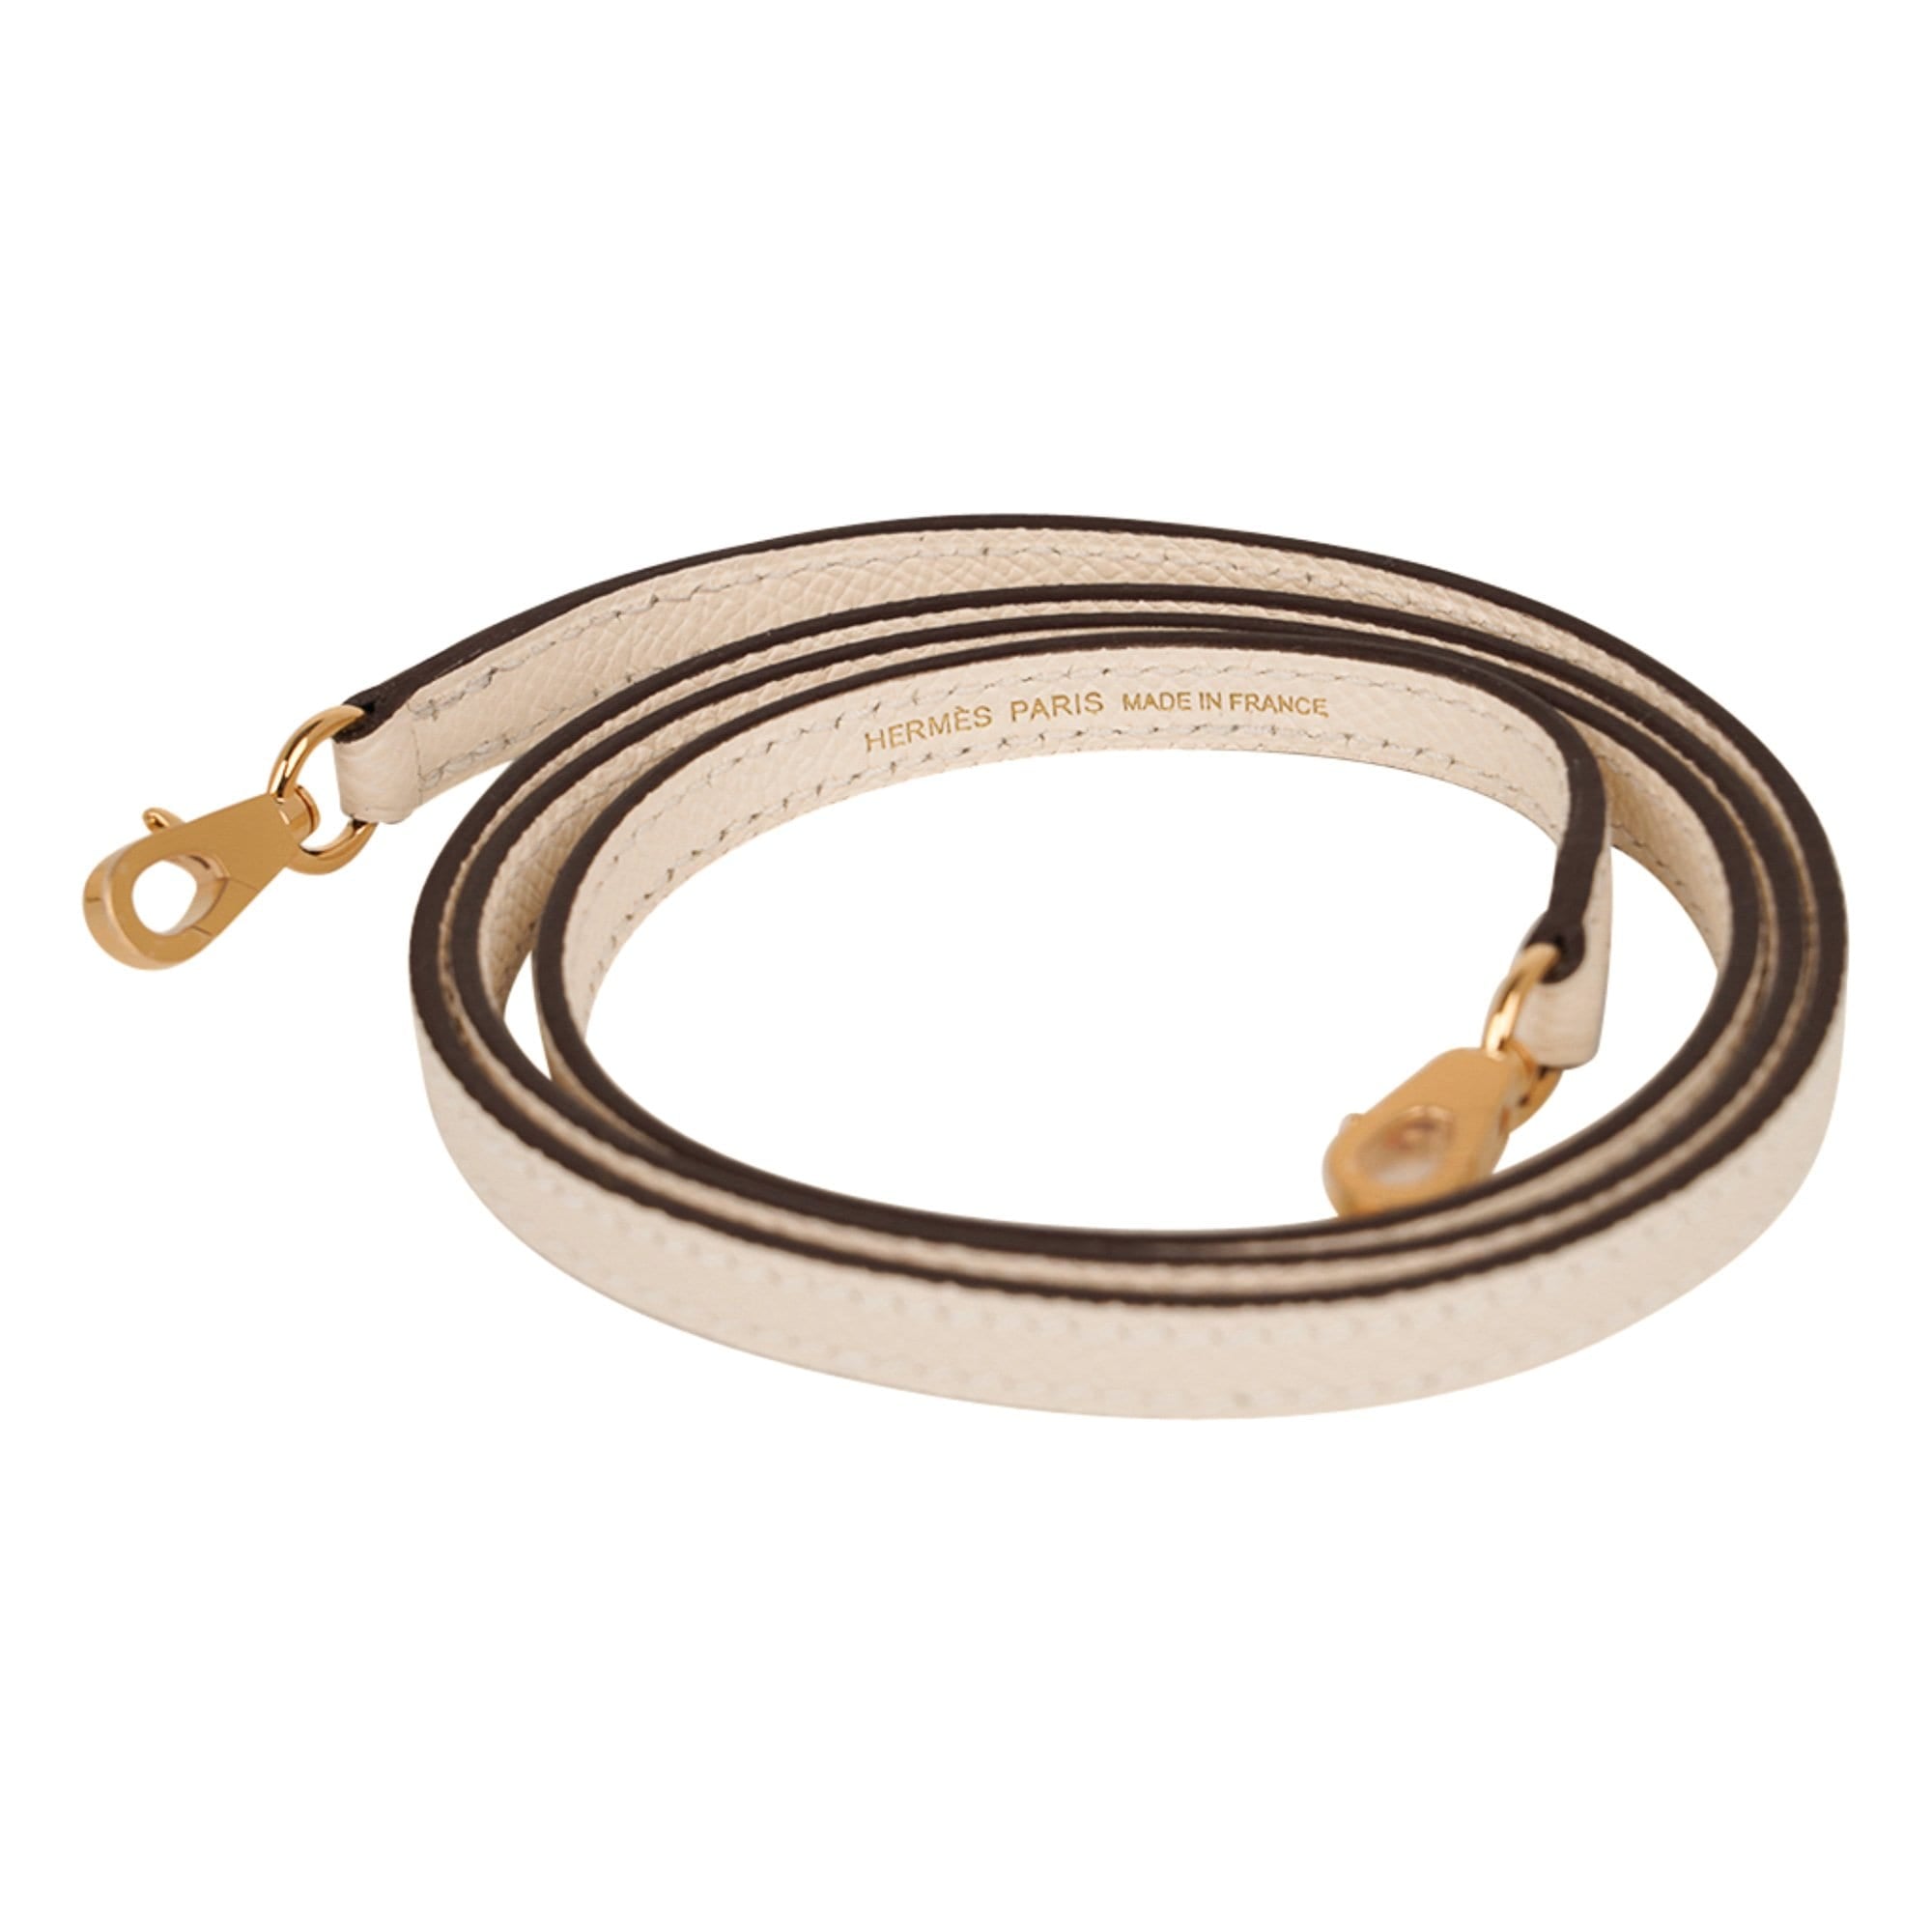 Hermès Mini Kelly II Nata Epsom Leather Gold Hardware For Sale at